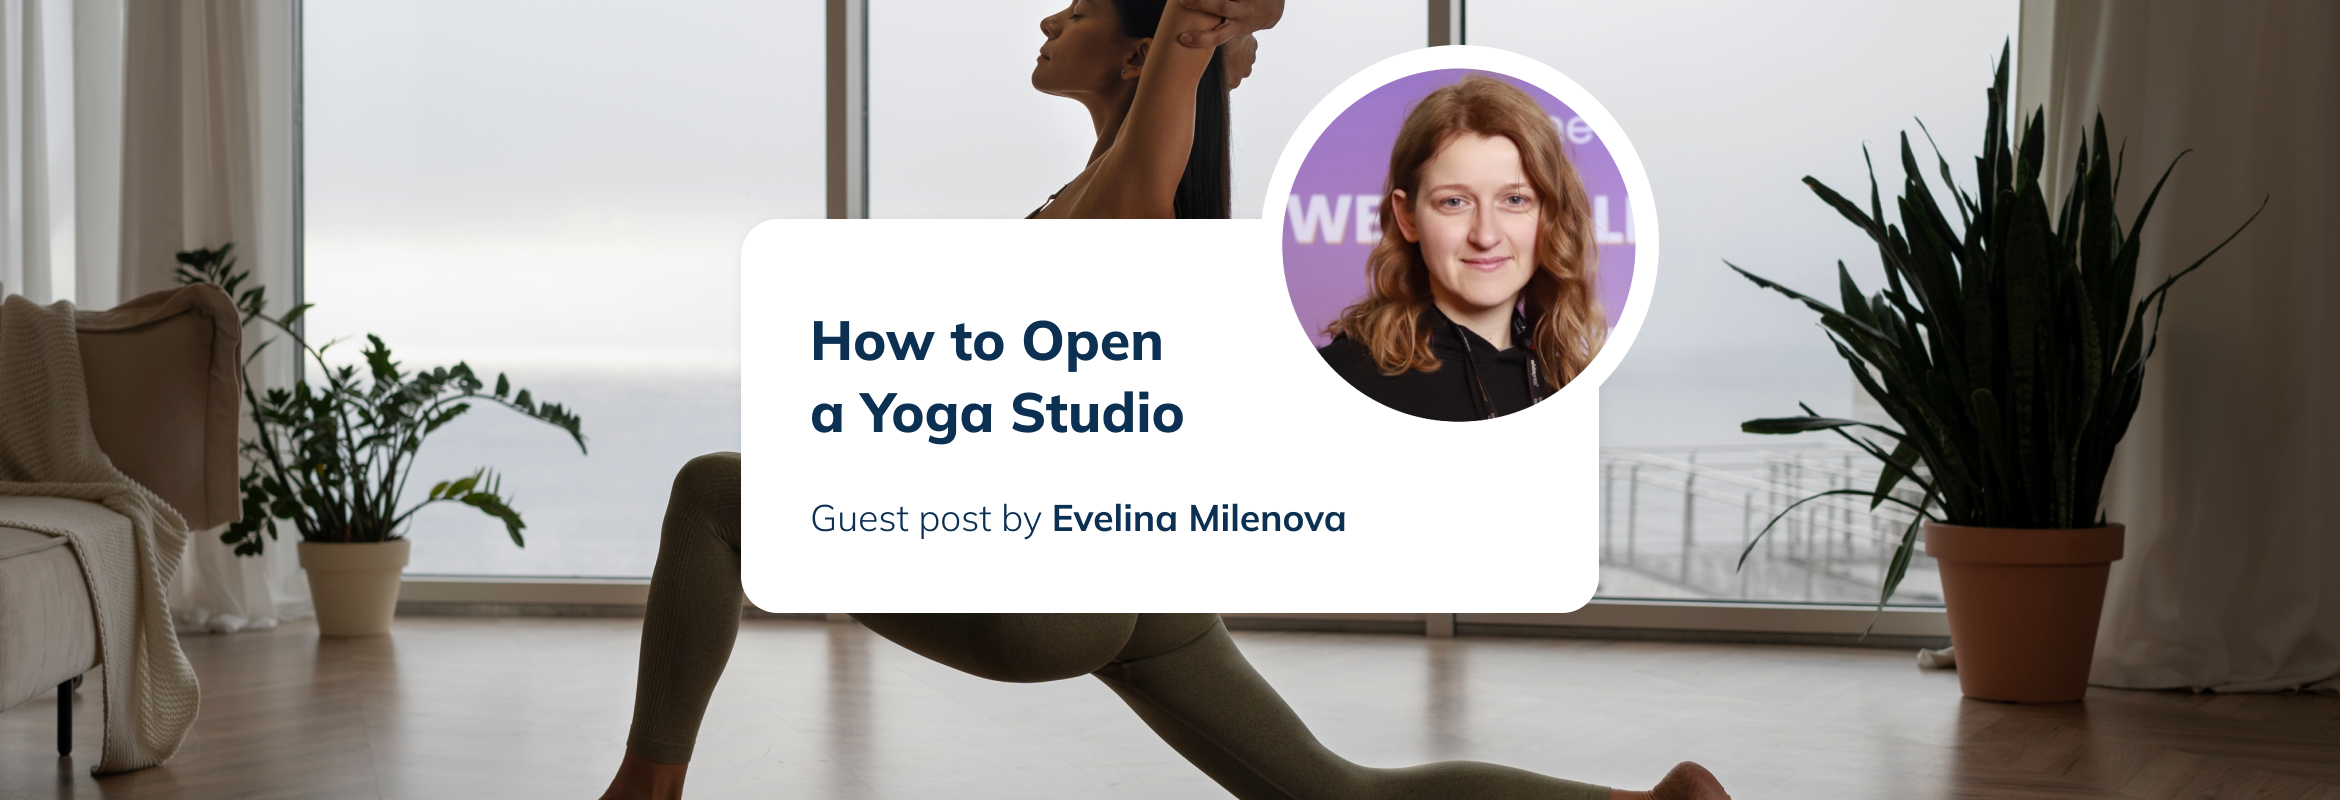 How to Open a Yoga Studio